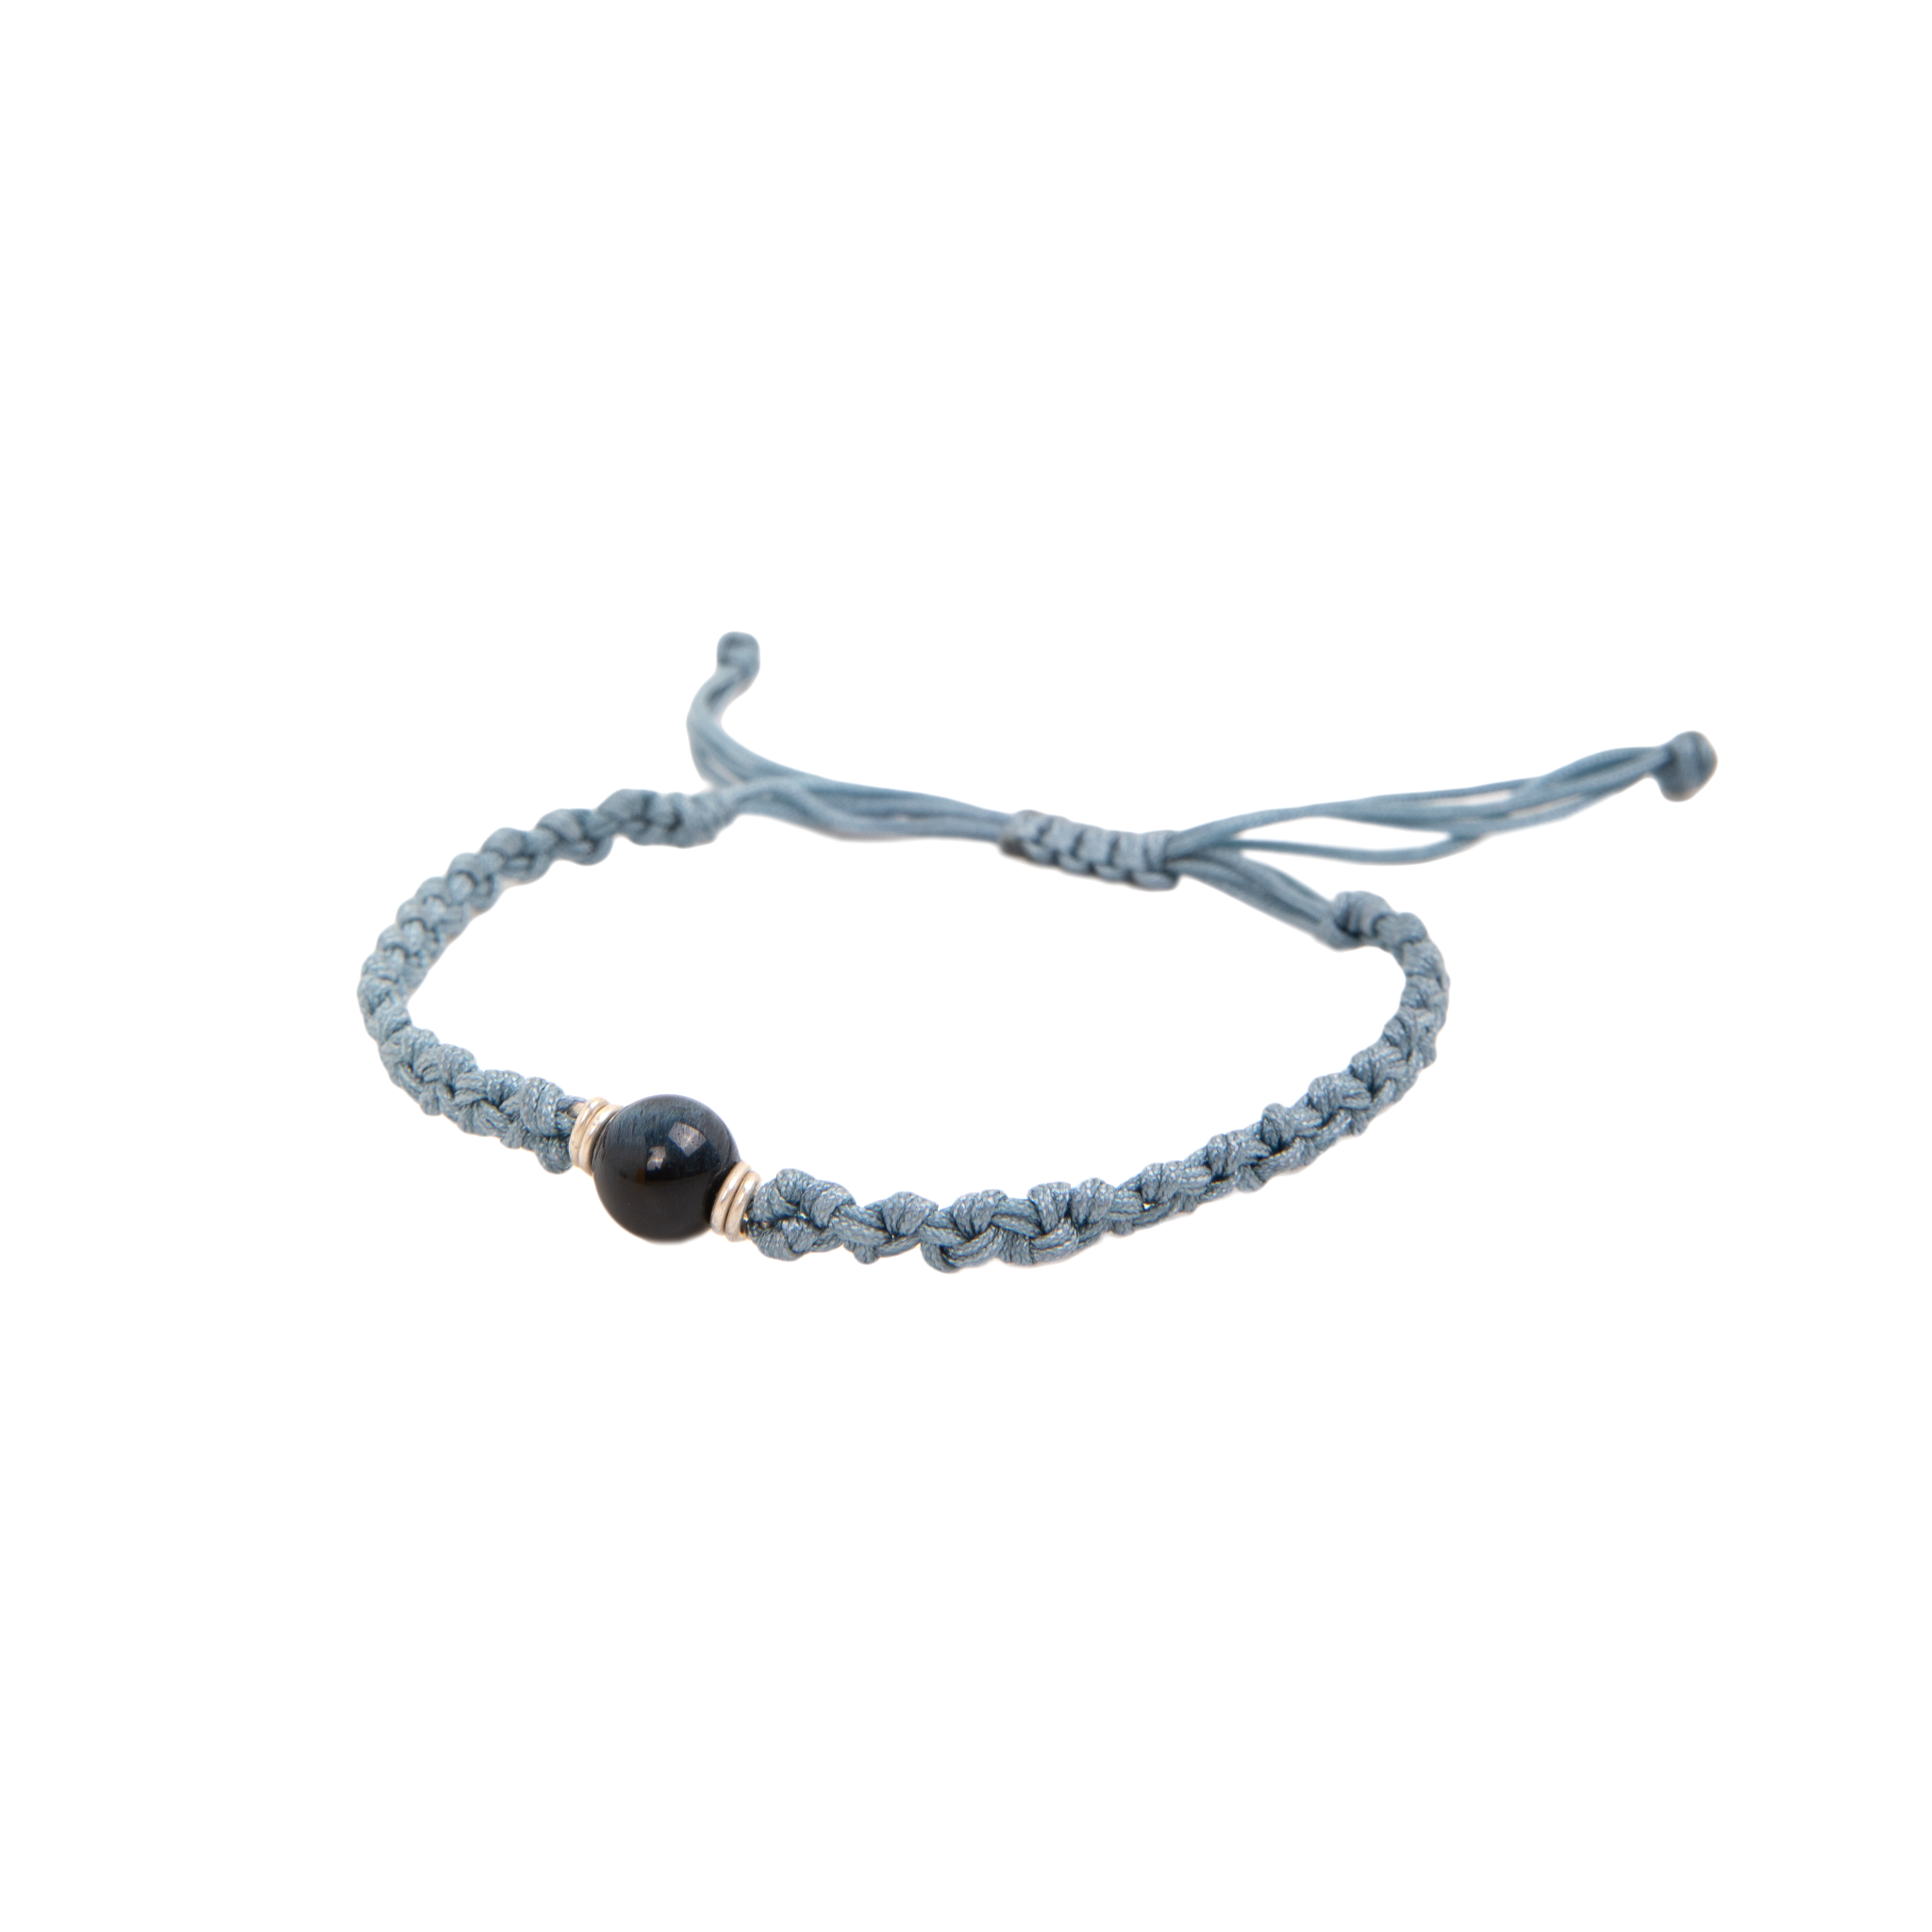 Handmade Friendship Bracelet #1 (Sky Blue Thread) - Blue Tiger's Eye & Sterling Silver Bracelets TARBAY   